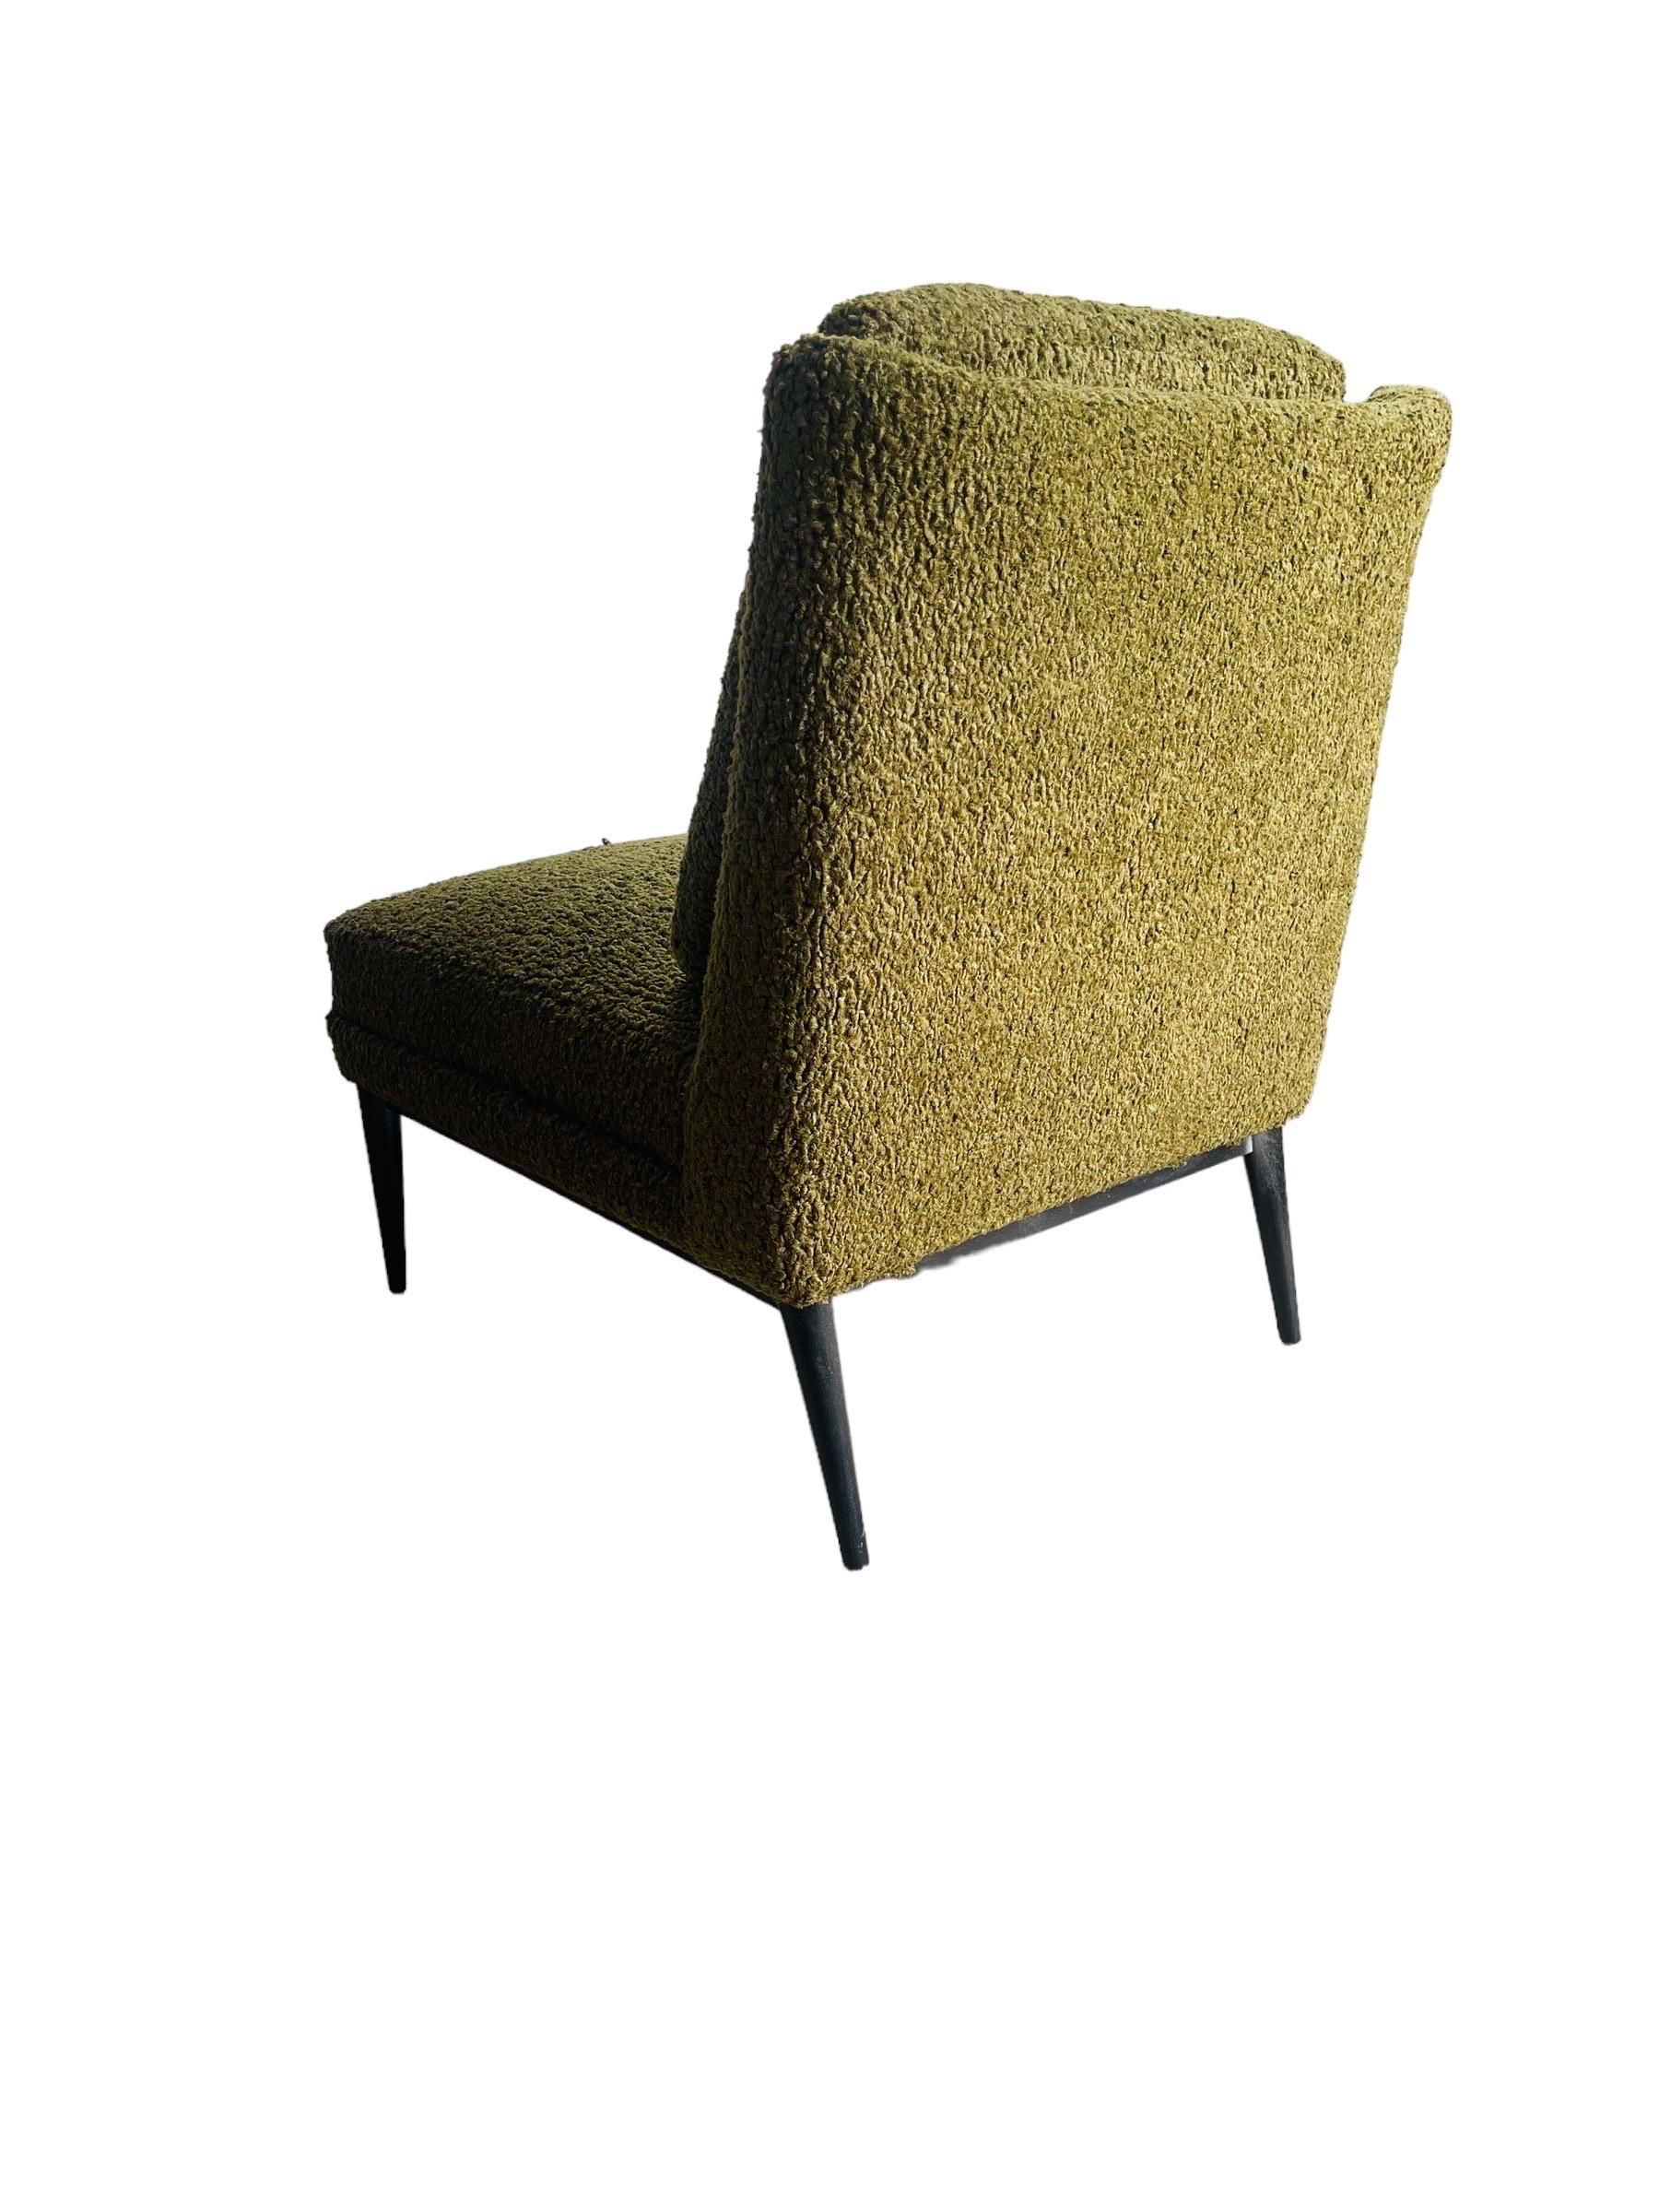 Fabric Paul McCobb Slipper Chair Mid Century  For Sale